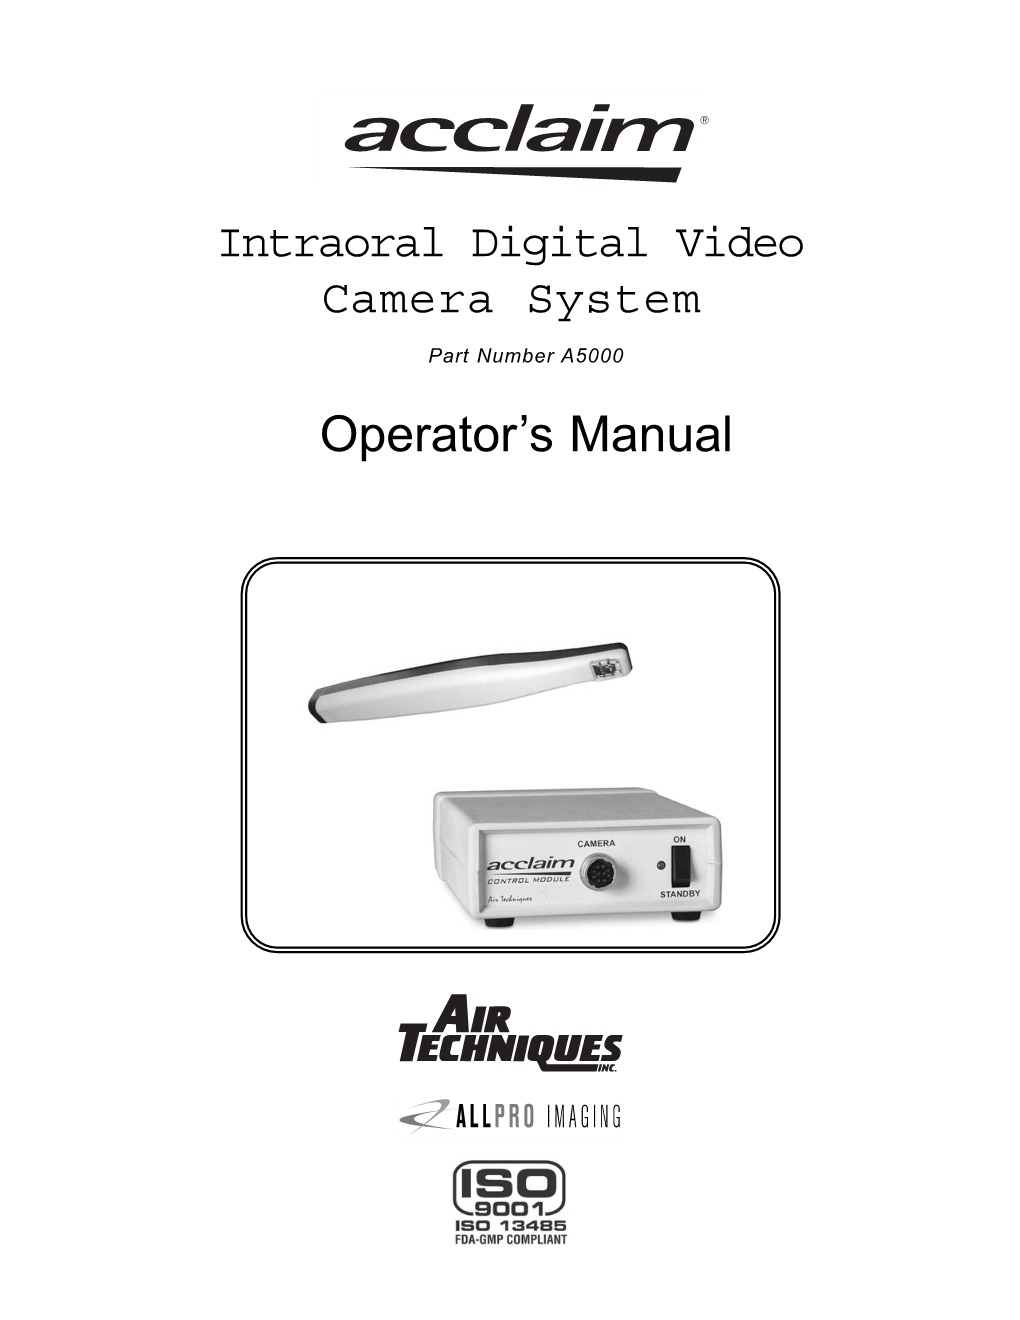 Acclaim Intraoral Digital Video Camera Operator's Manual..Pdf